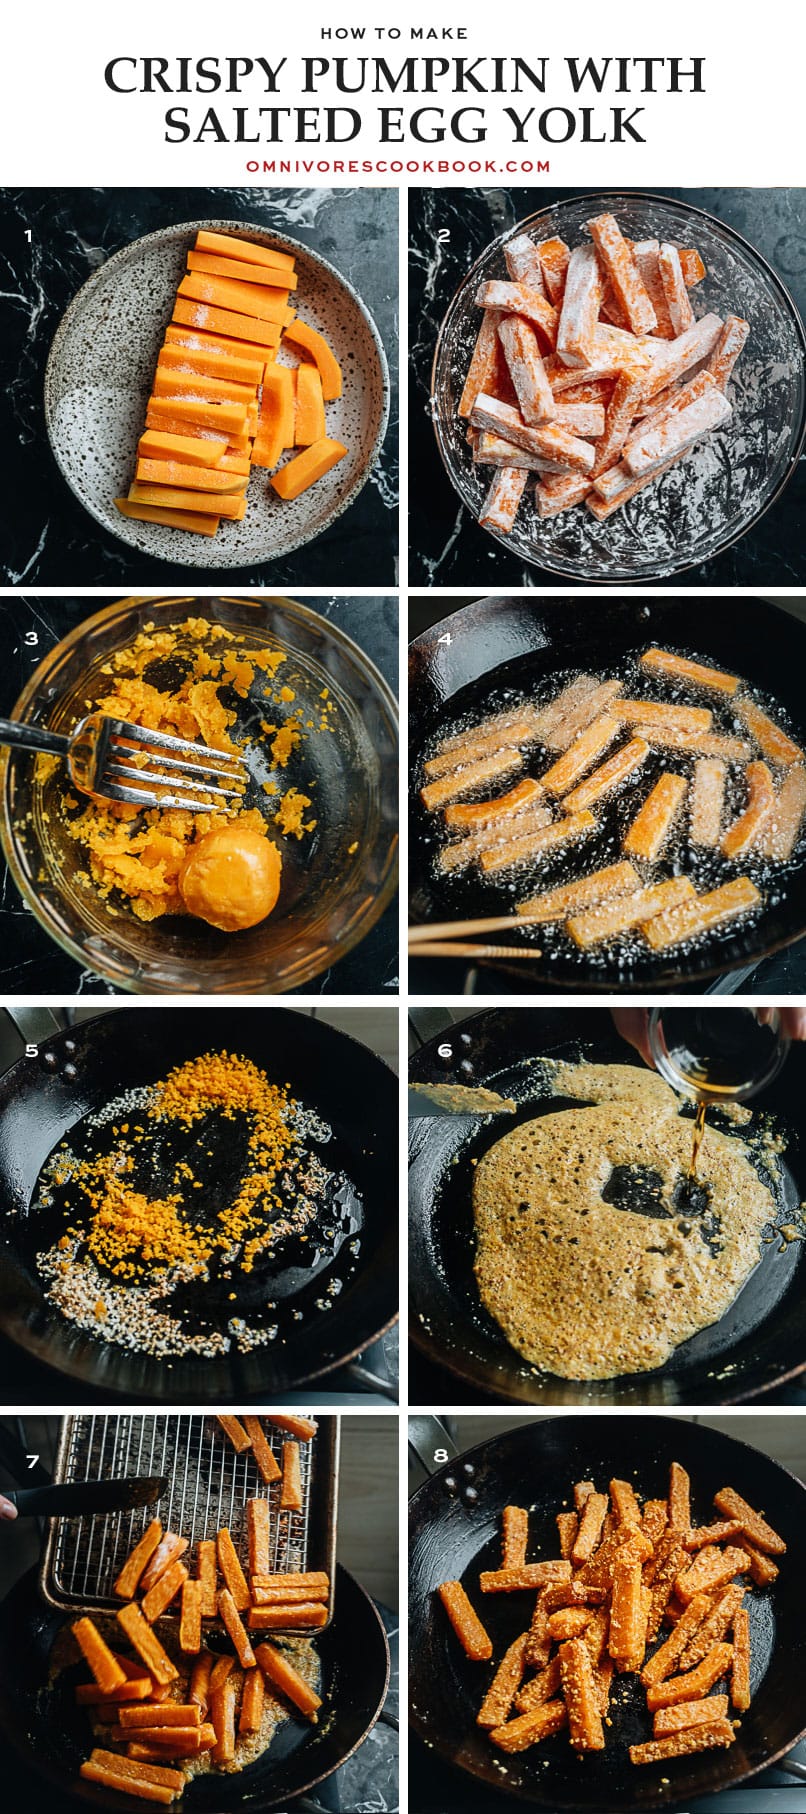 Crispy fried pumpkin with salted egg yolk cooking step-by-step